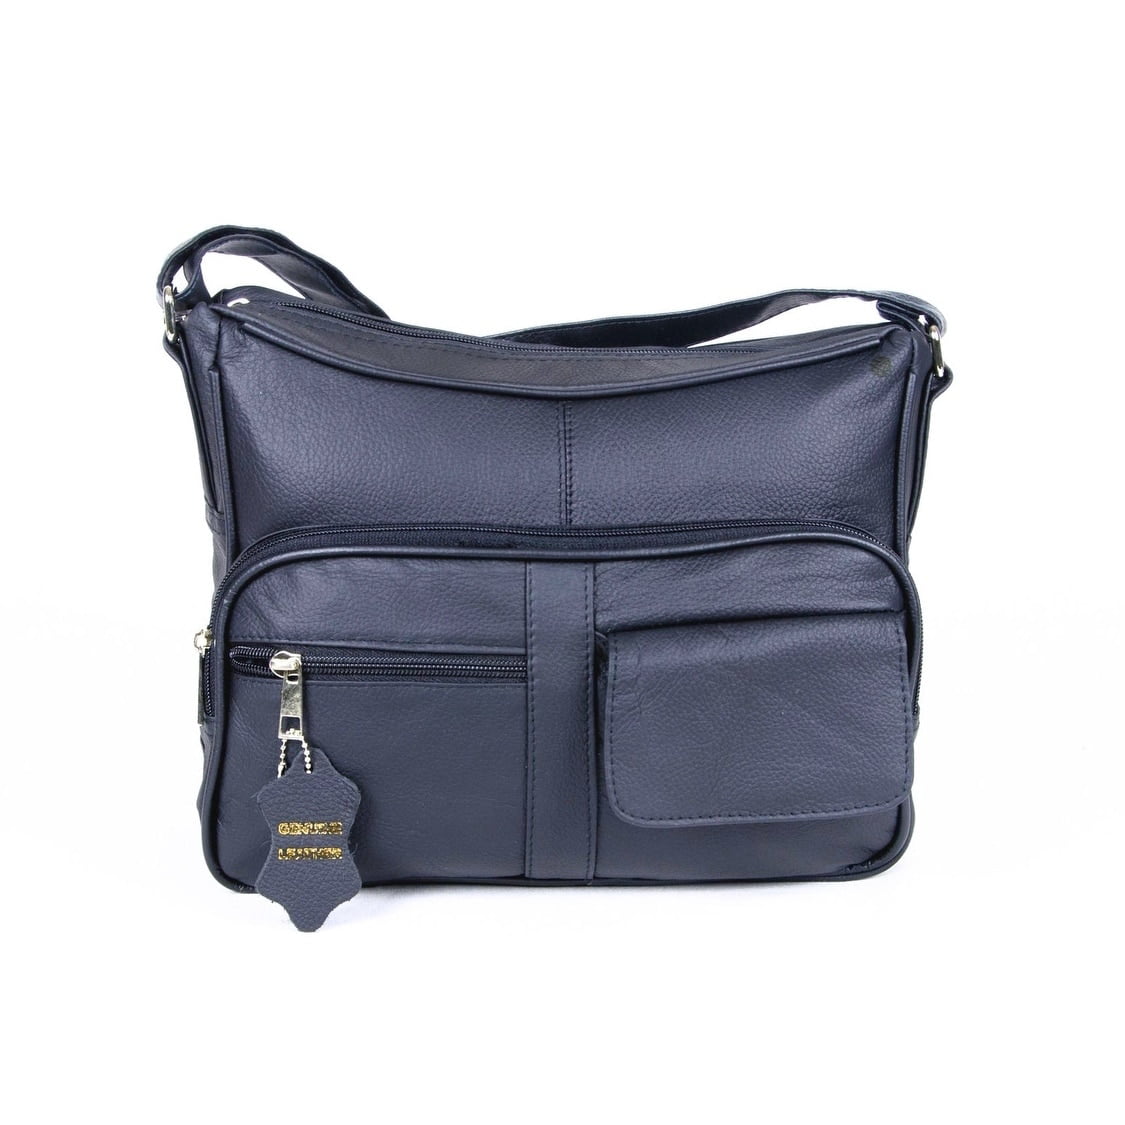 AFONiE - AFONiE Genuine Leather Shoulder or Crossbody Handbag Navy blue - www.bagssaleusa.com